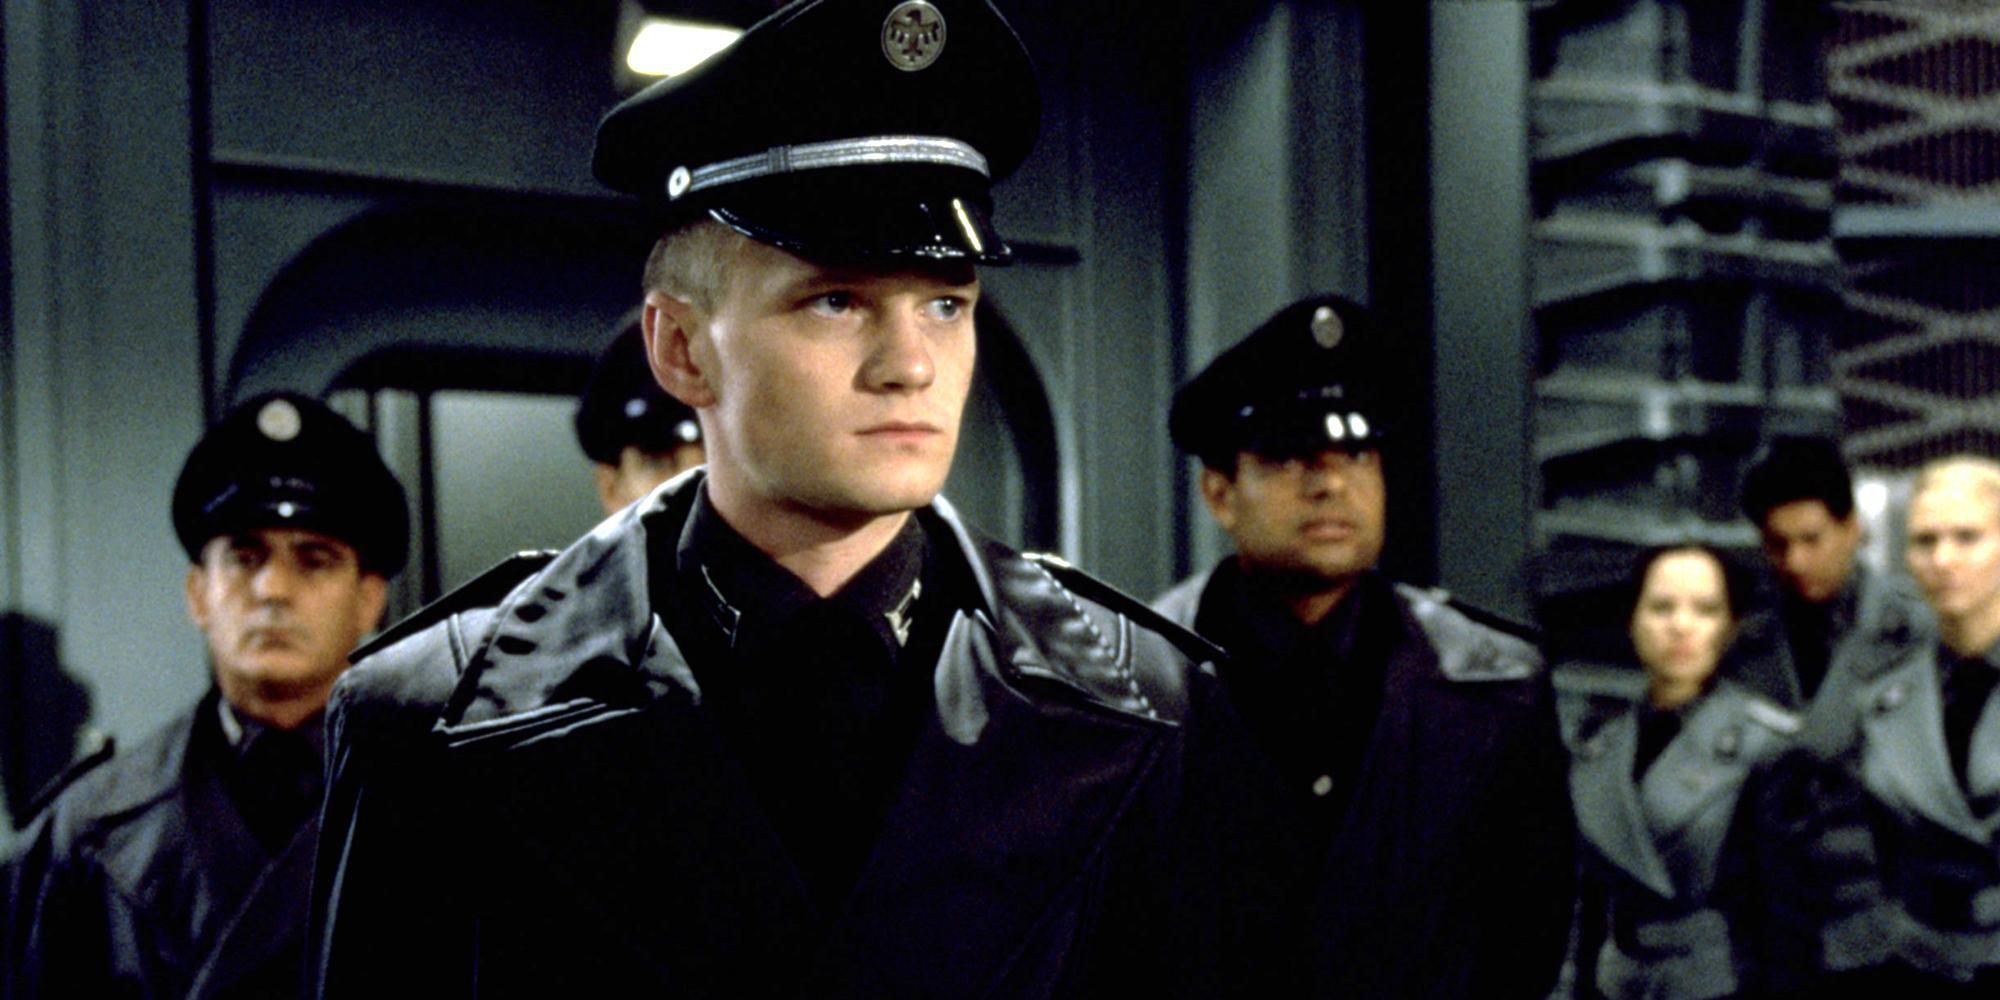 starship-trooopers-nazi-uniforms.jpg